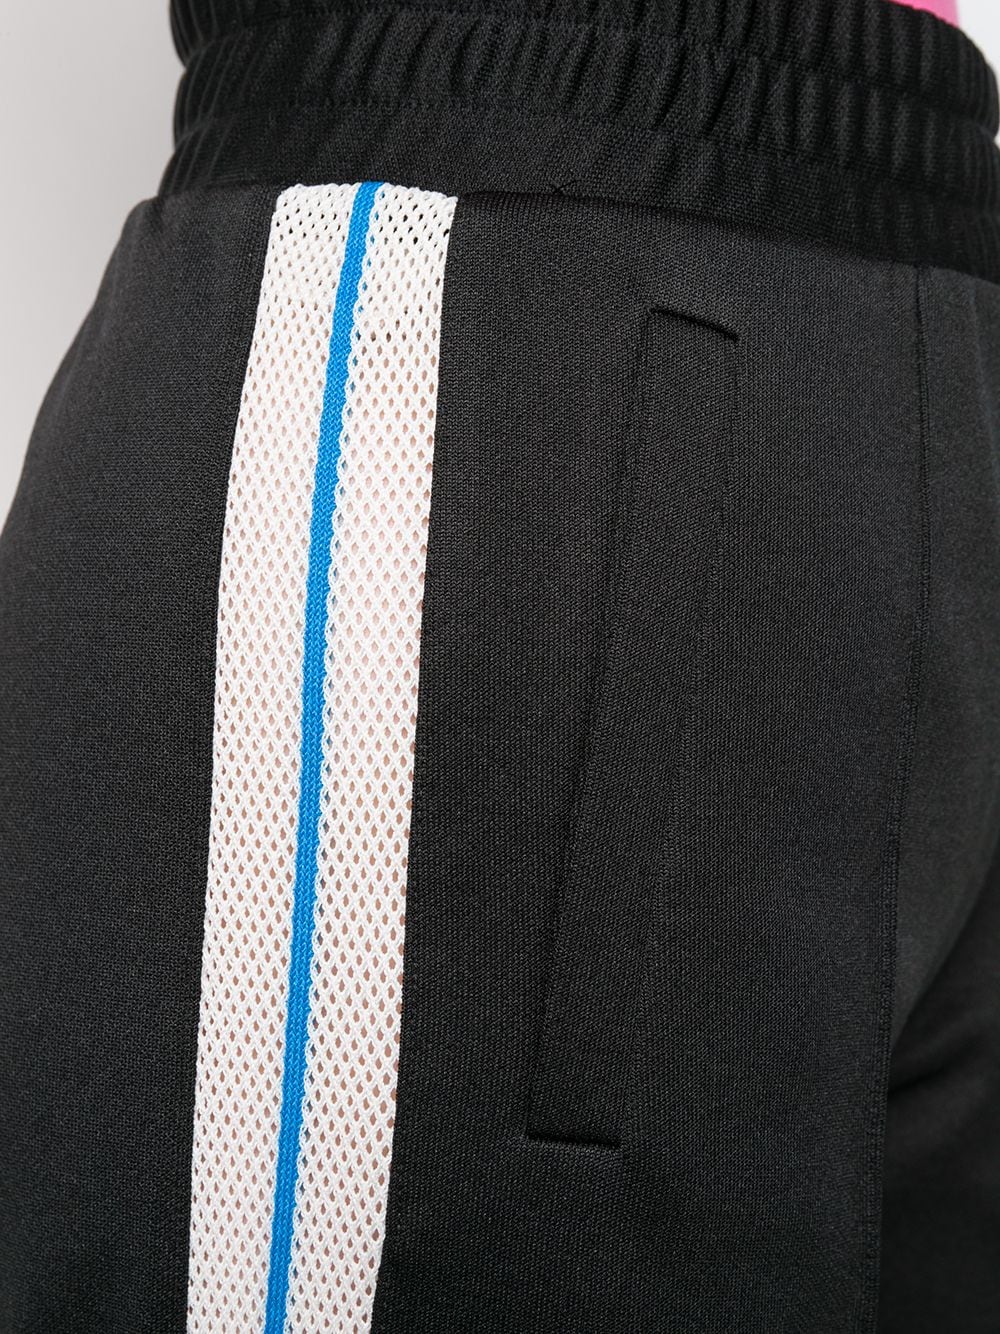 фото Off-white широкие спортивные брюки с лампасами